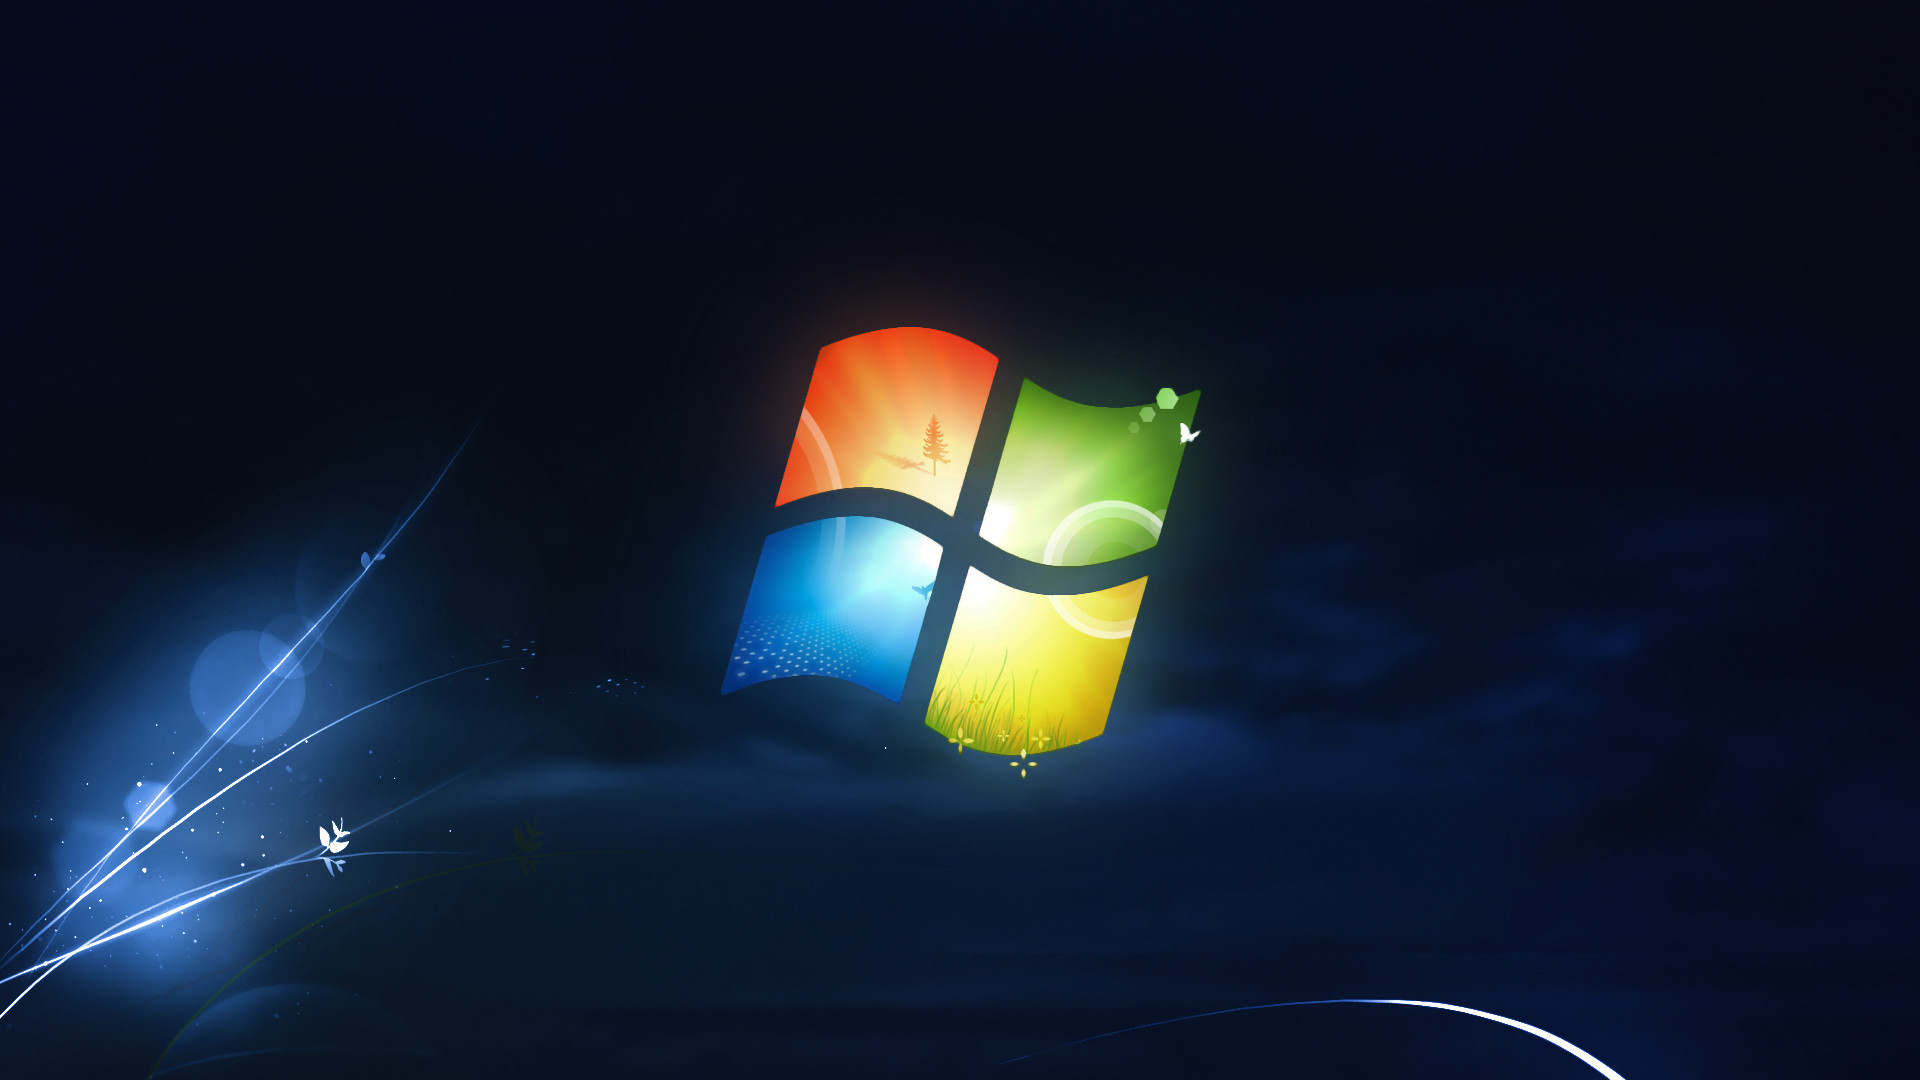 Microsoft Wallpaper Background Themes Image